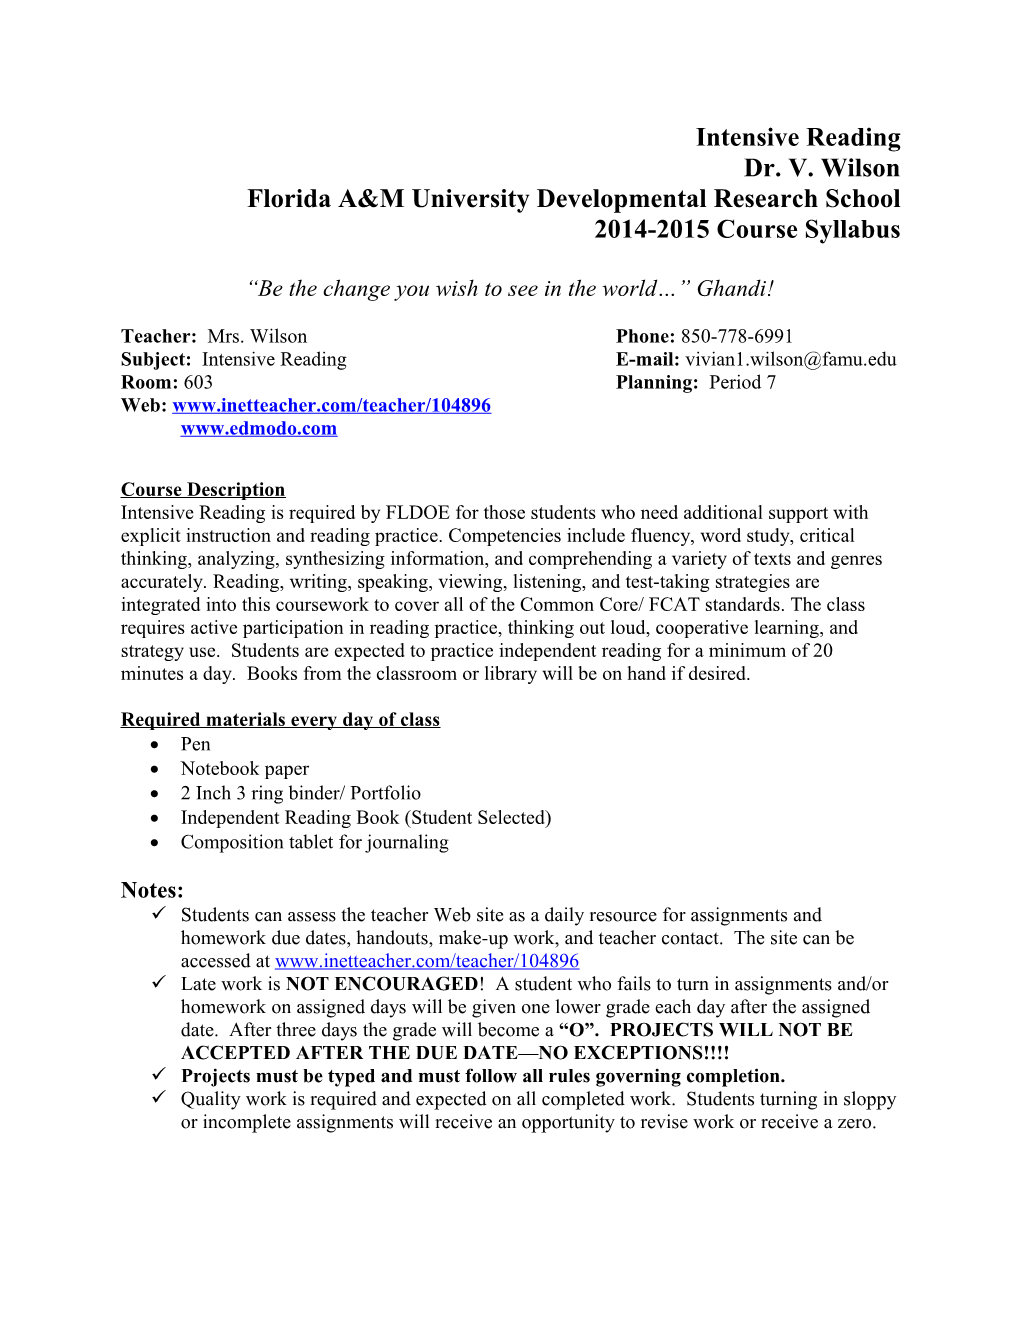 Florida A&M University Developmental Research School